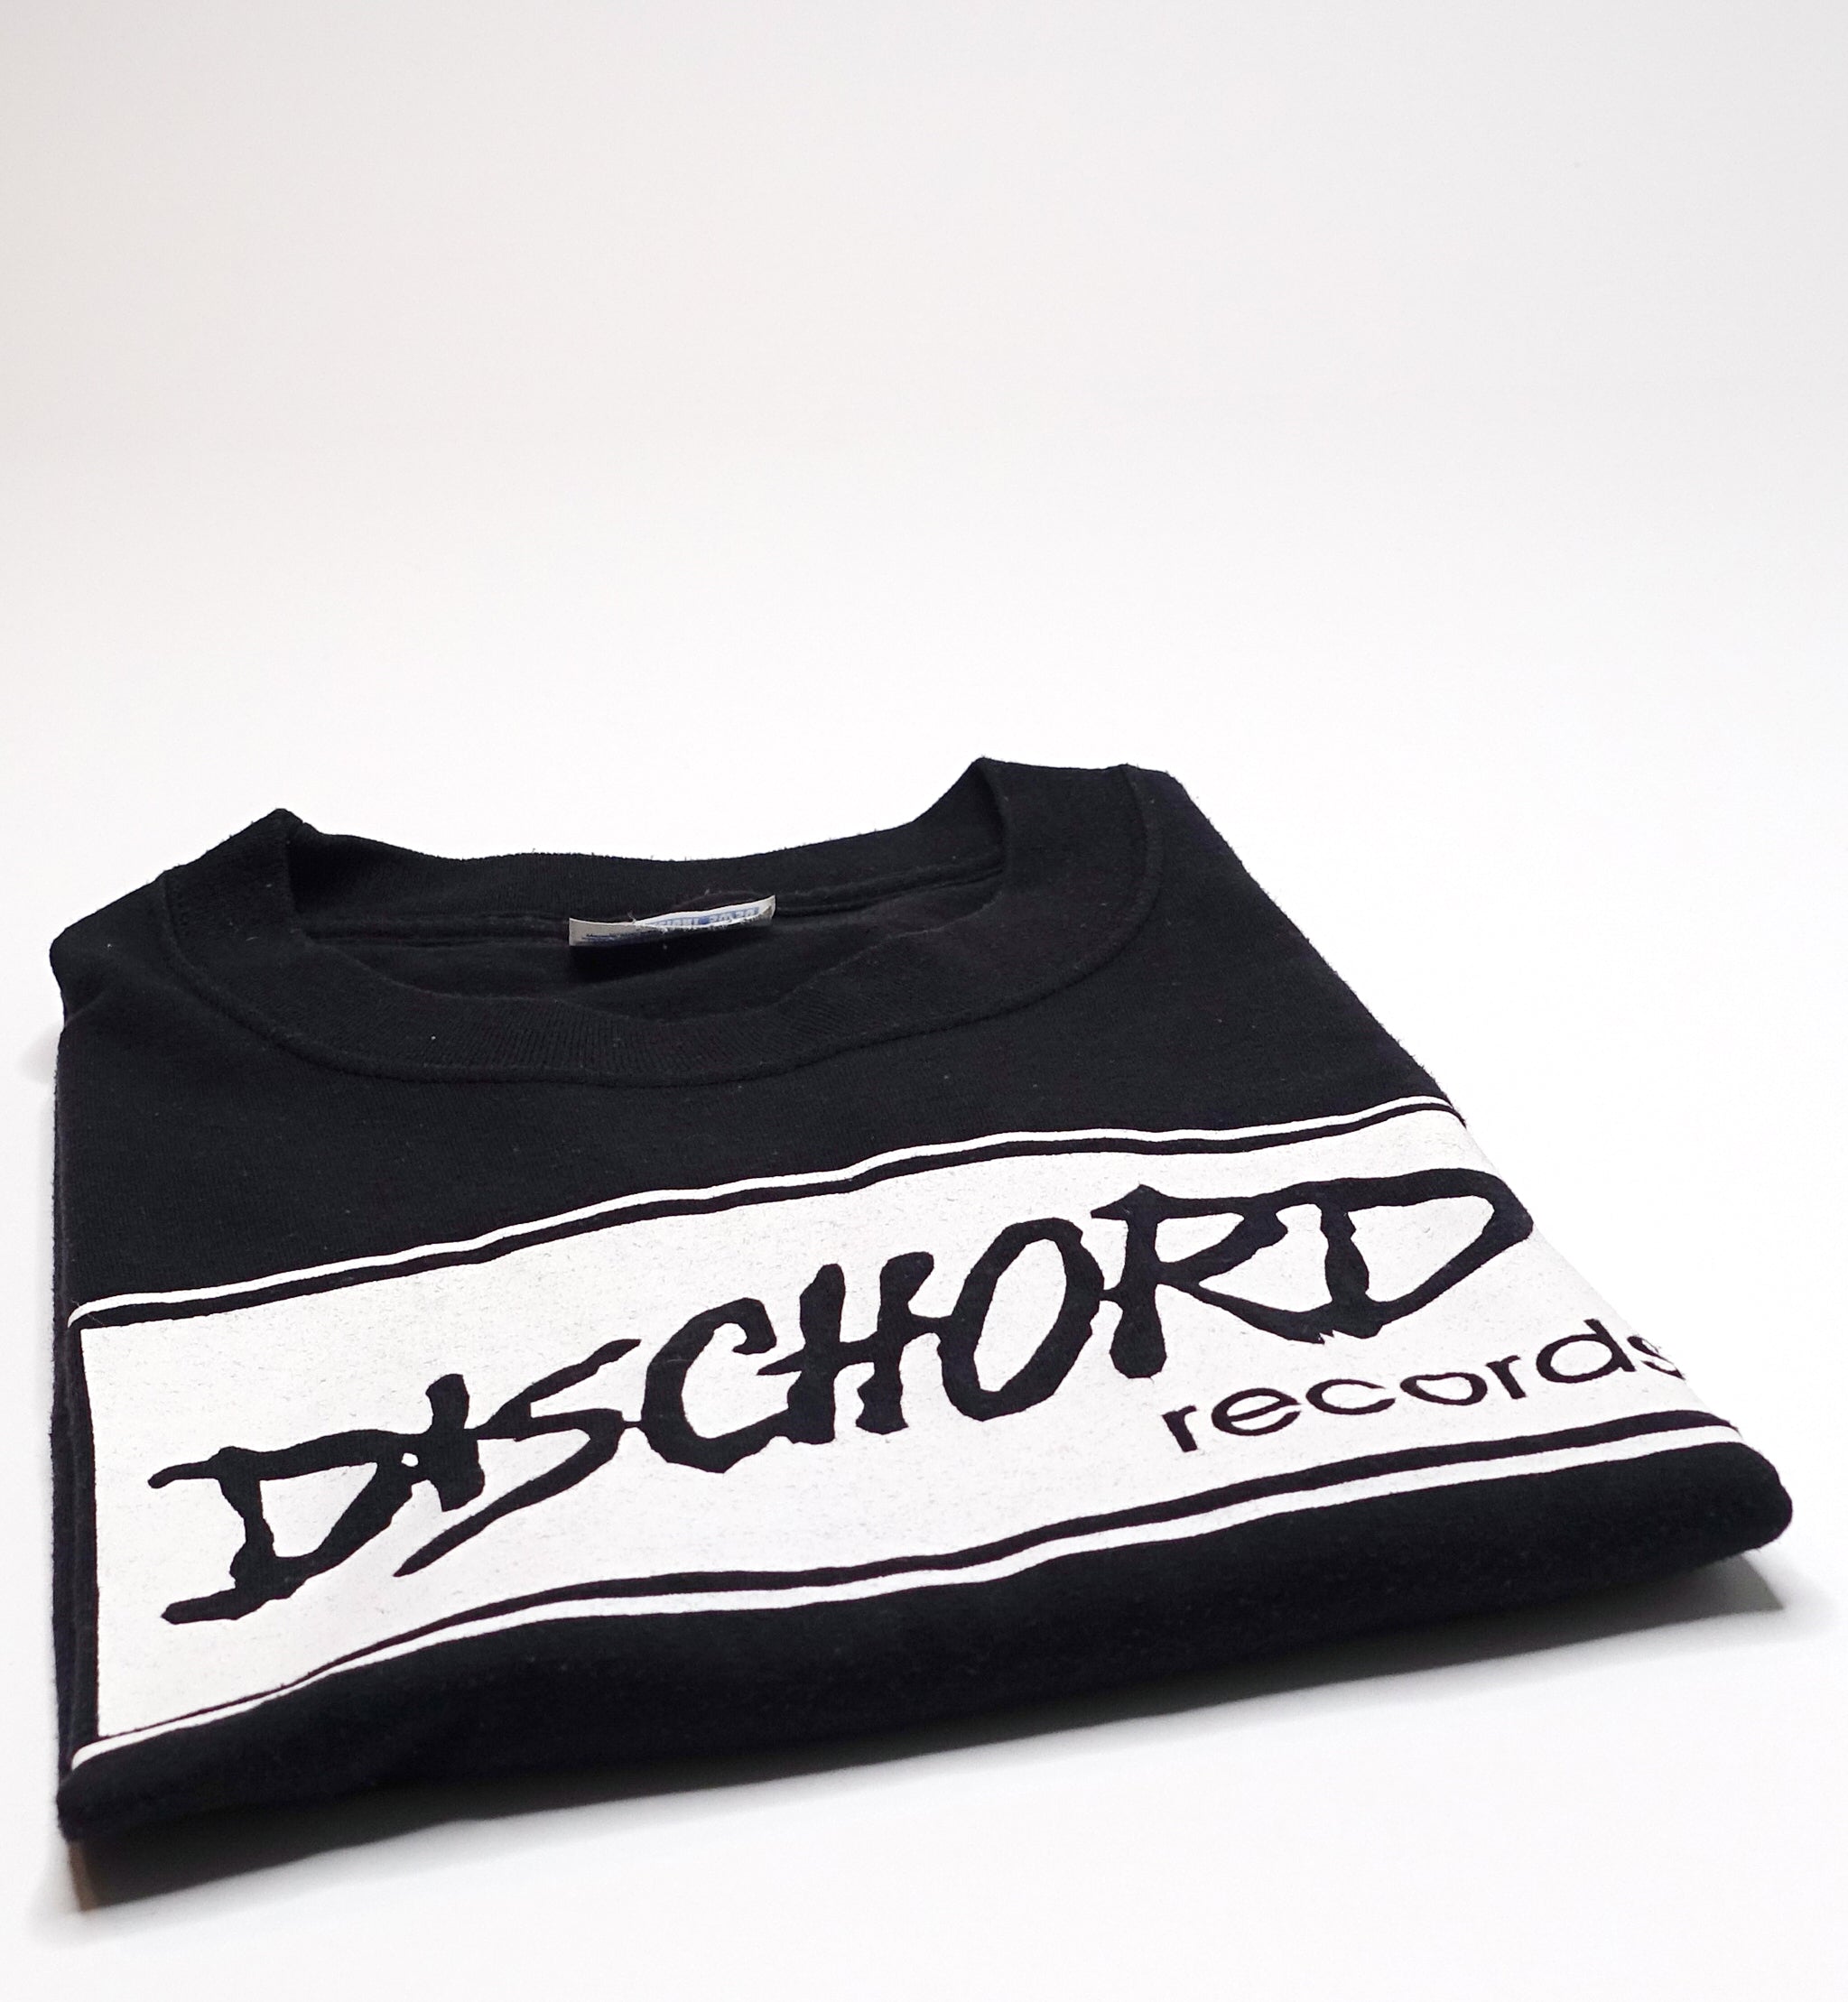 Discord Records - Shirt Size XL